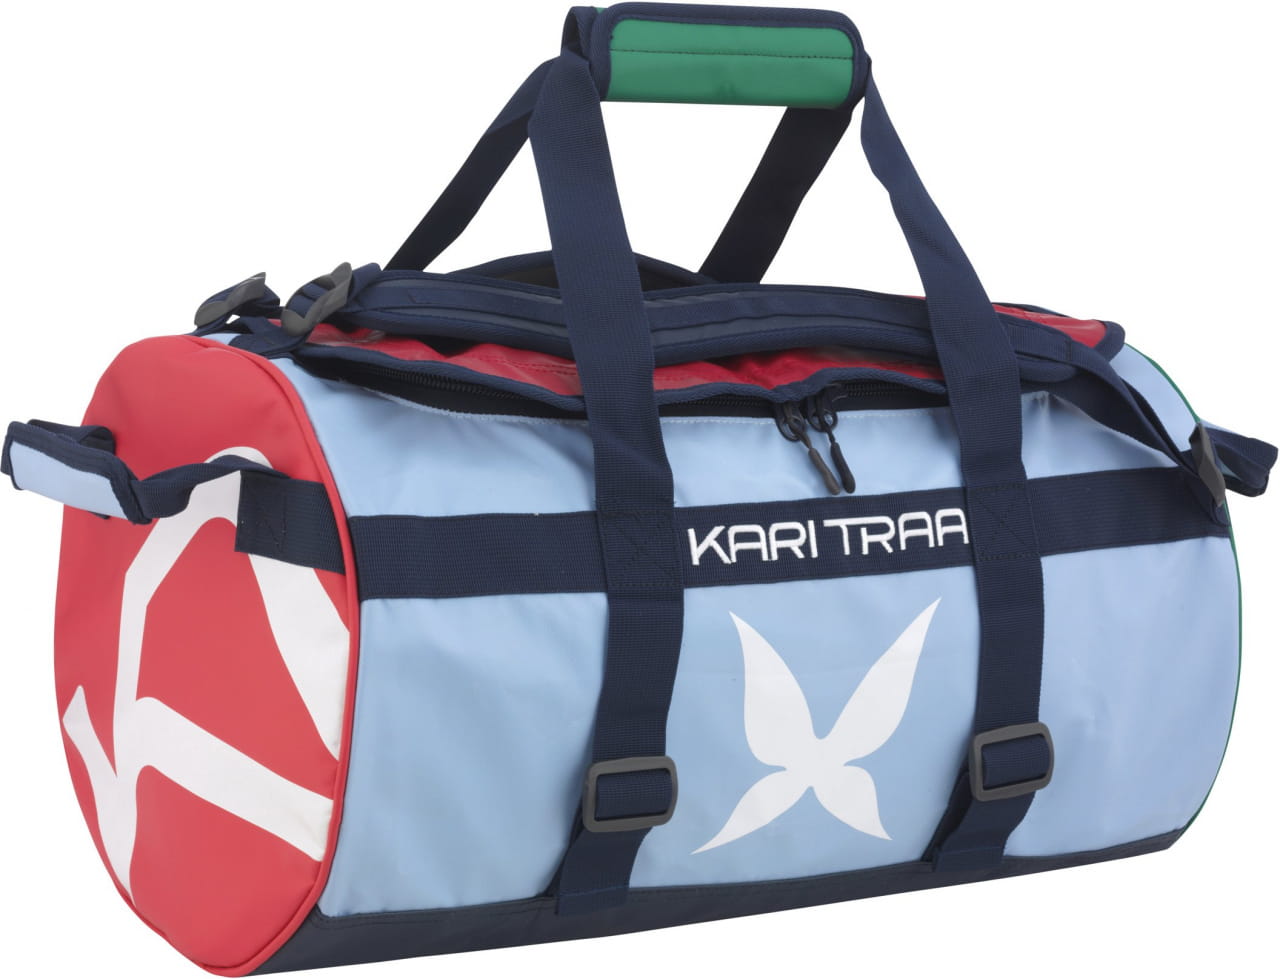 Sportovní taška Kari Traa Kari 30l Bag